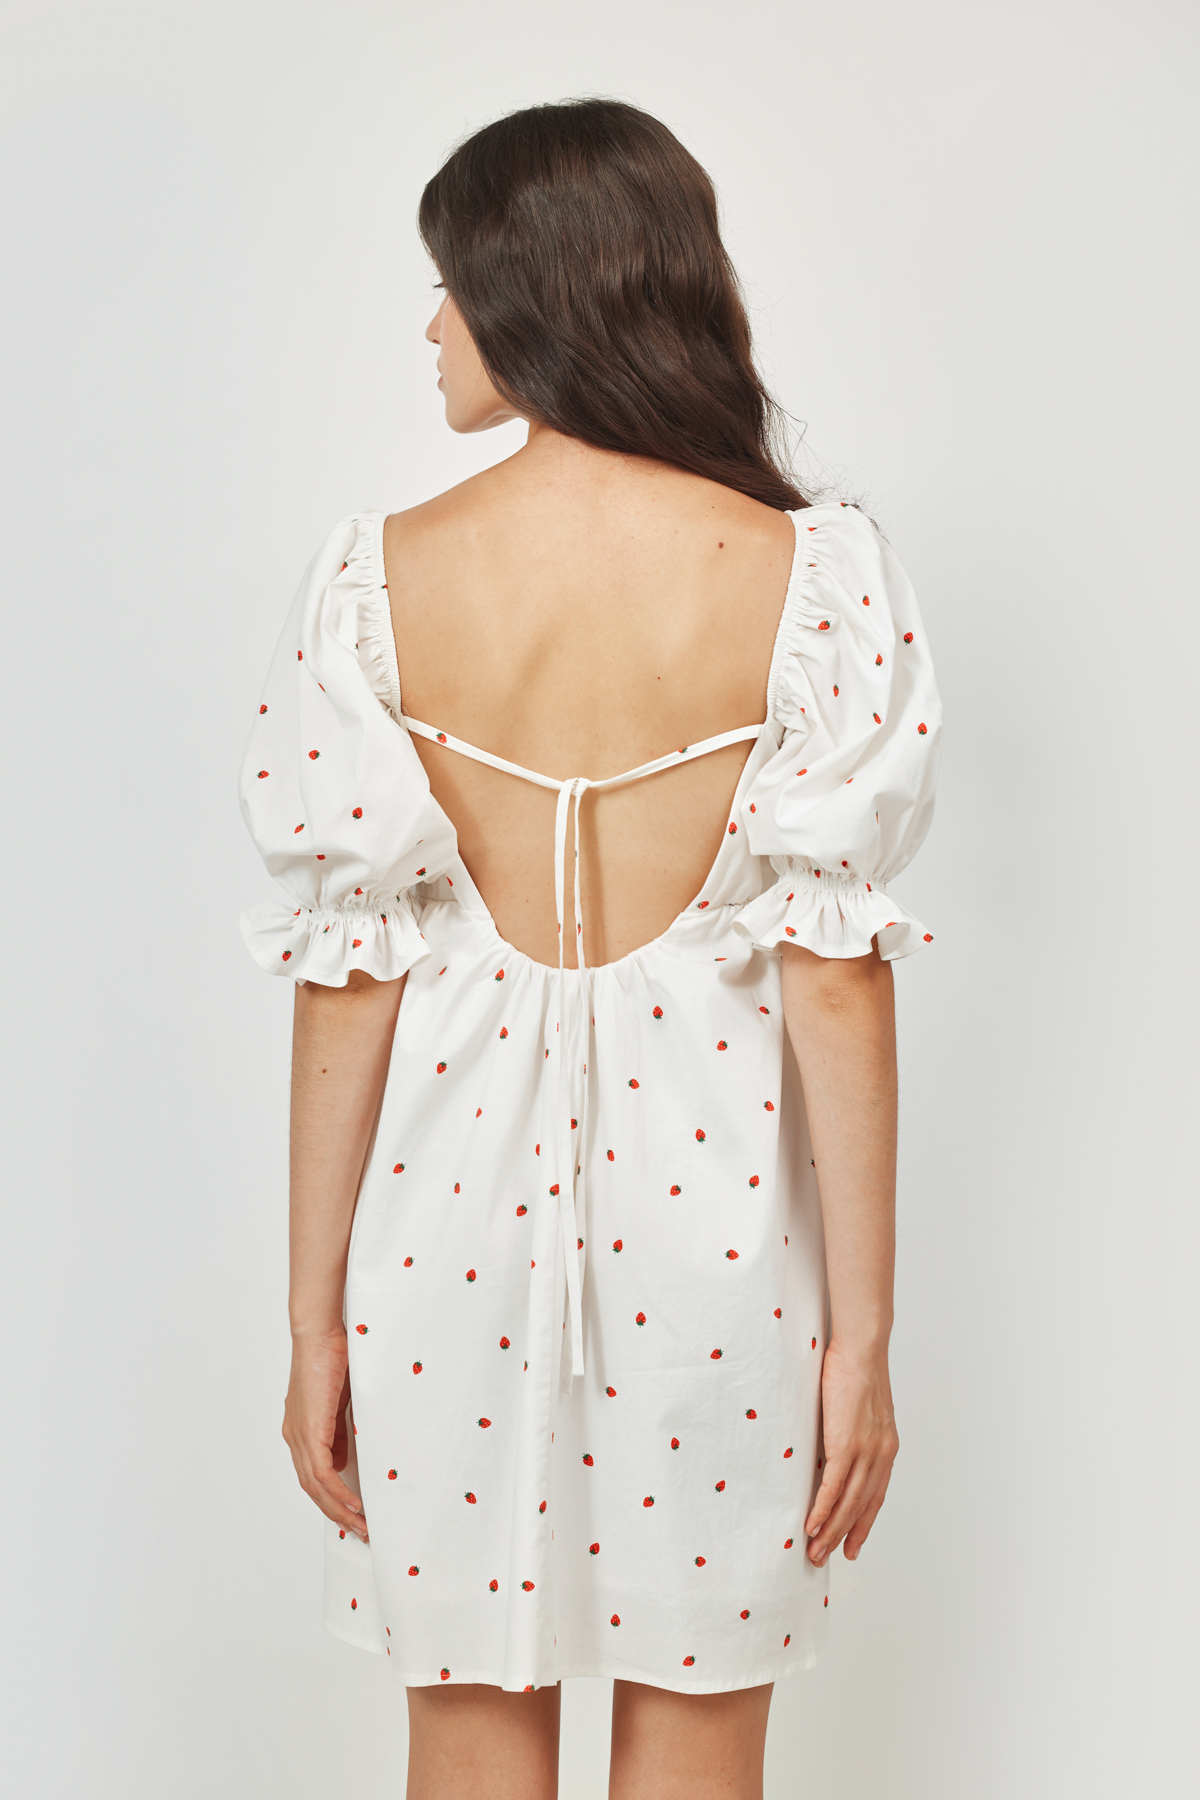 Short dress in strawberry print, photo 6